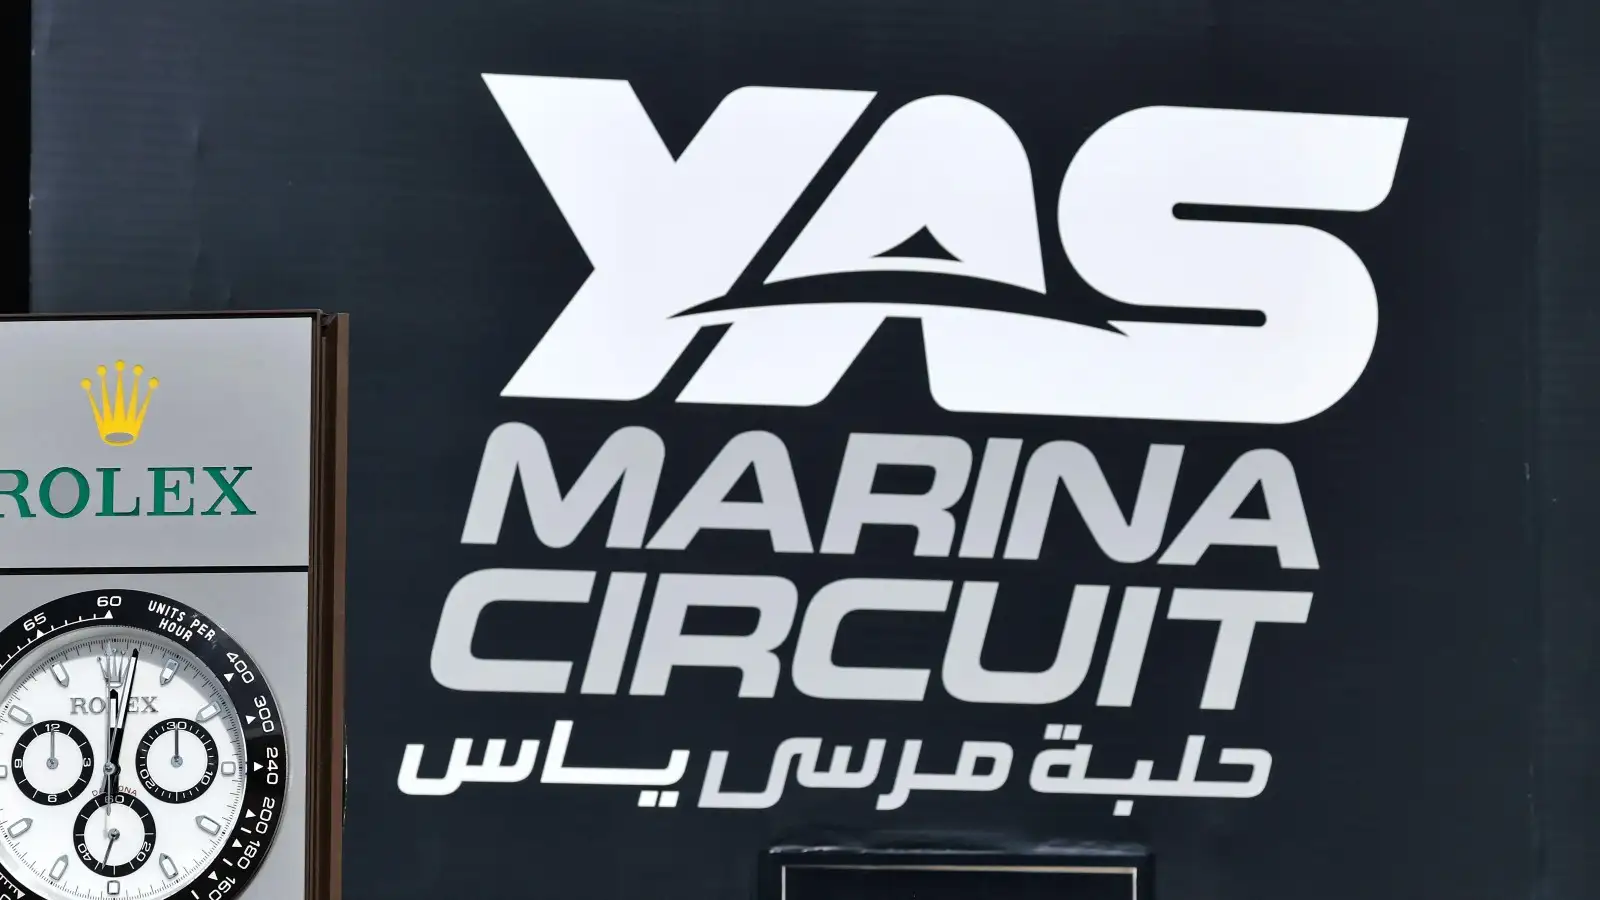 Branding for the Yas Marina Circuit at the Abu Dhabi Grand Prix.